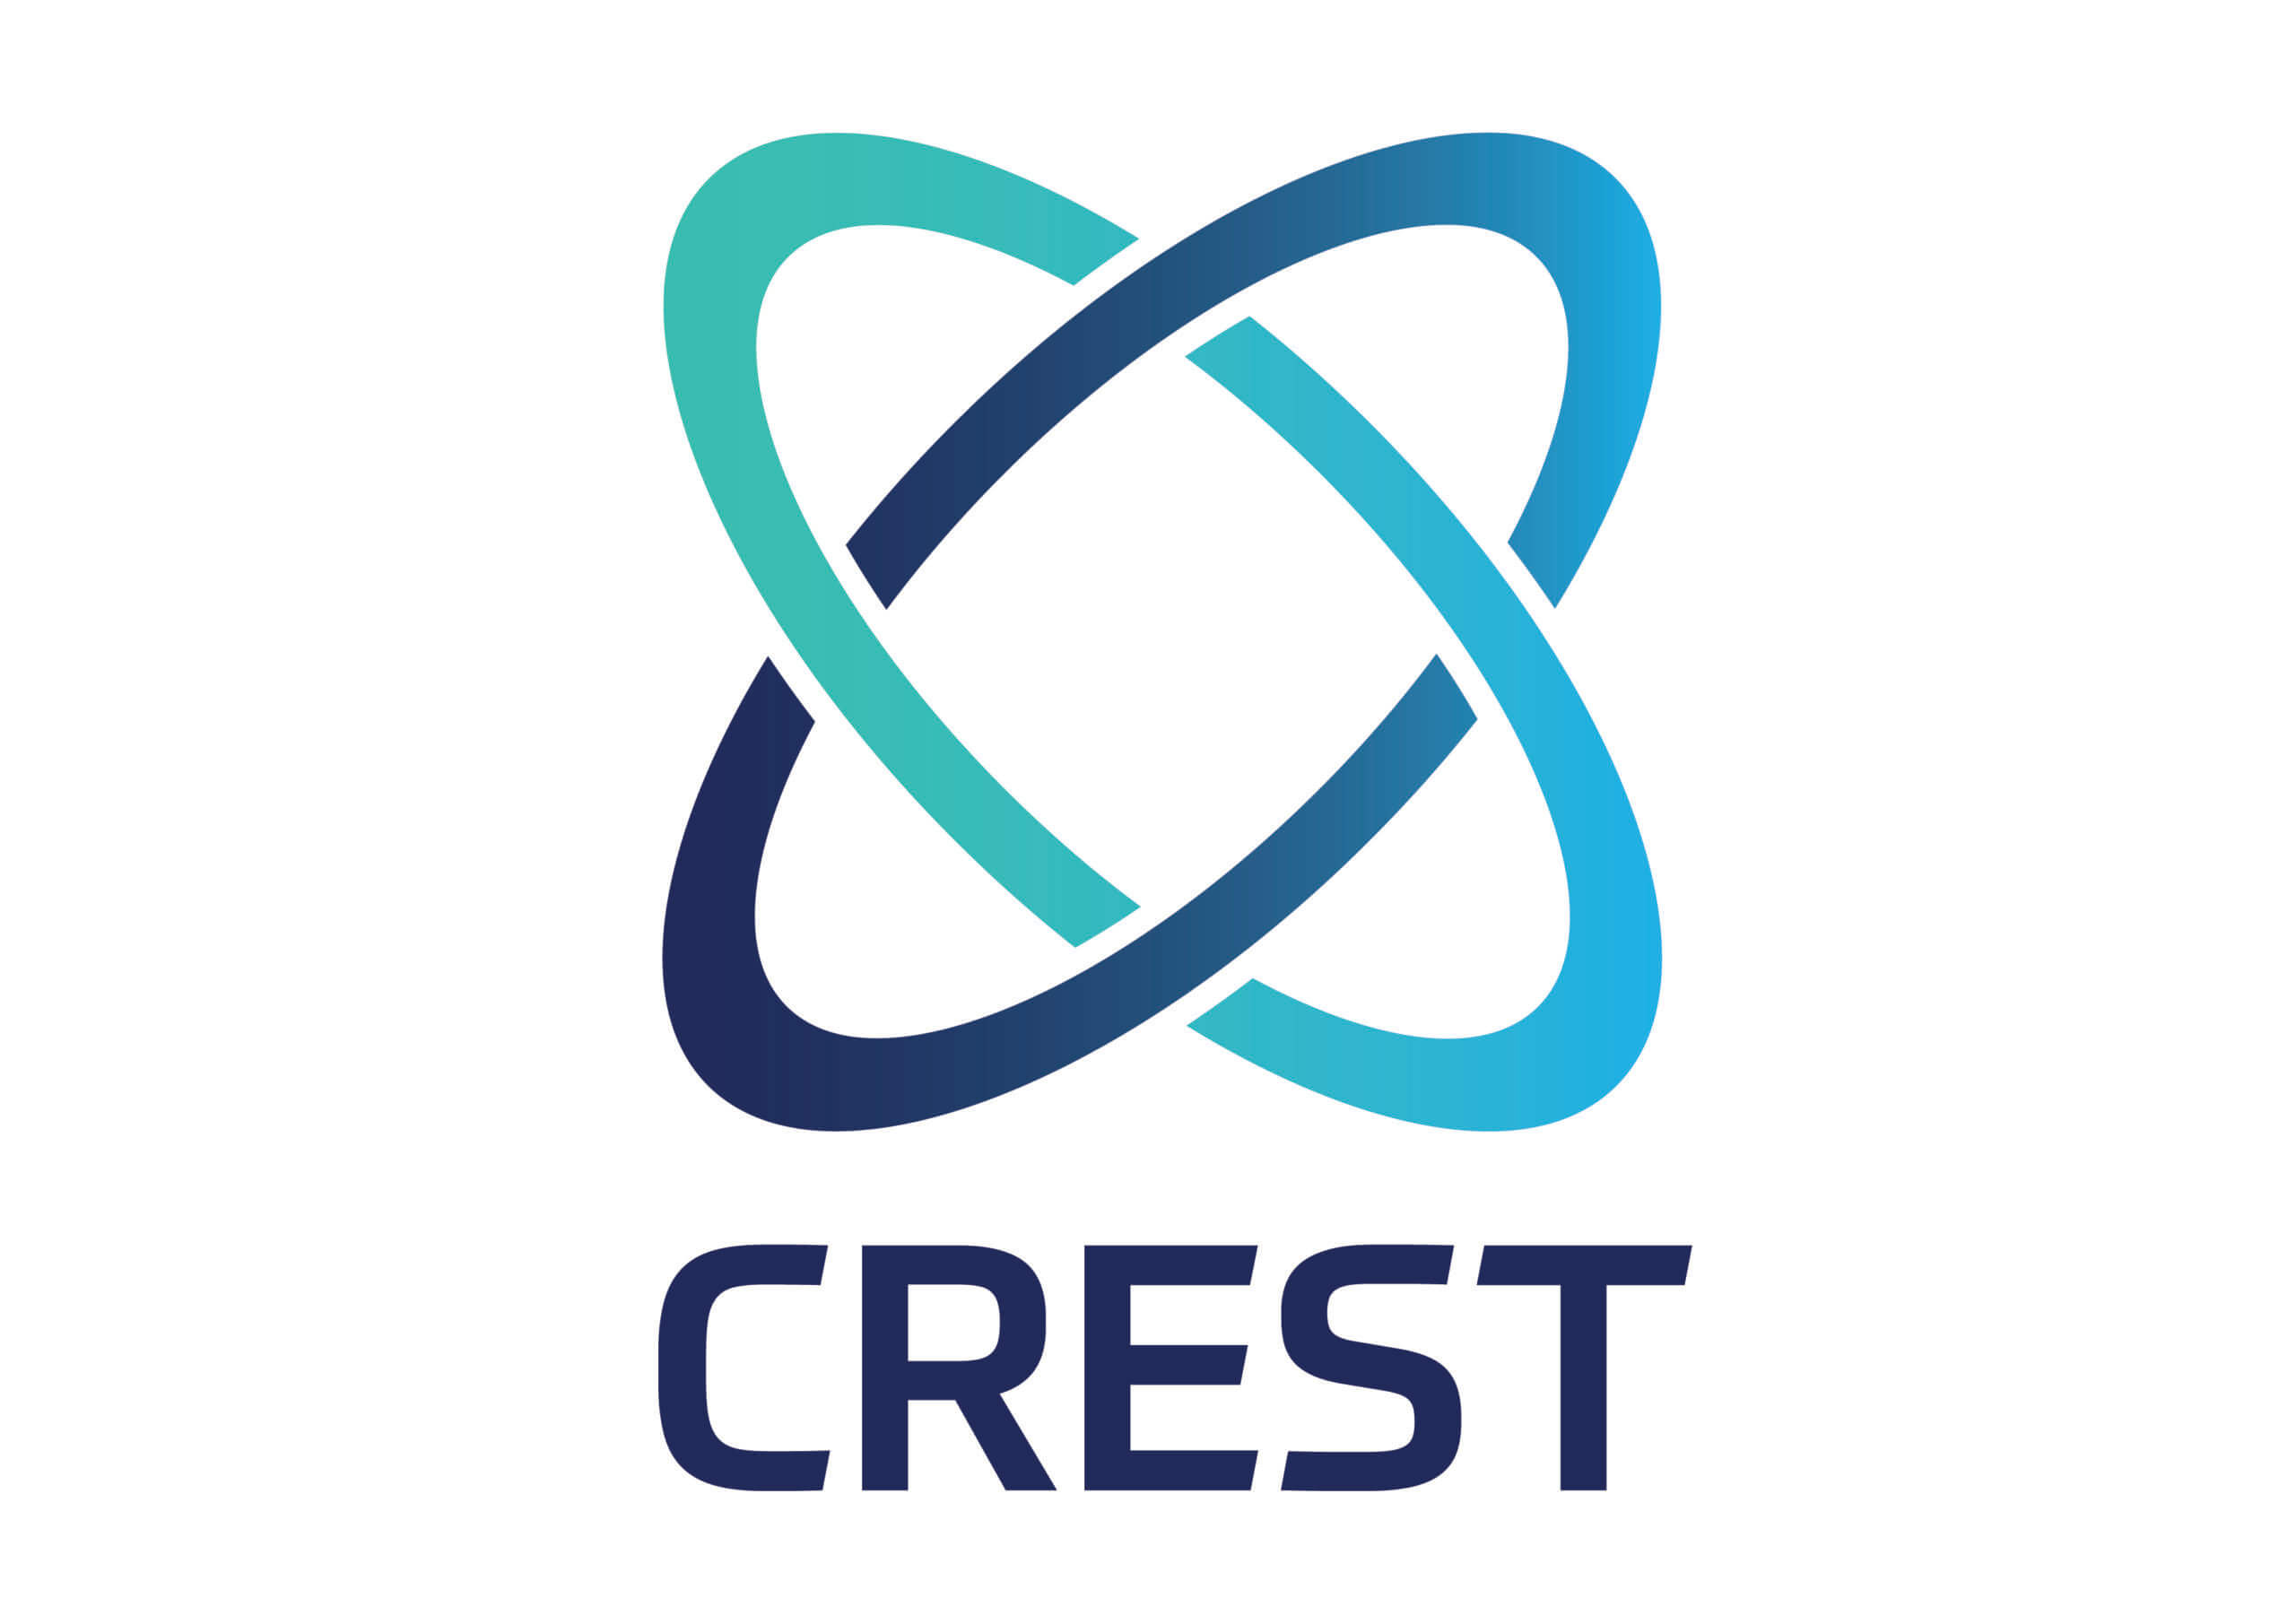 crest-icon